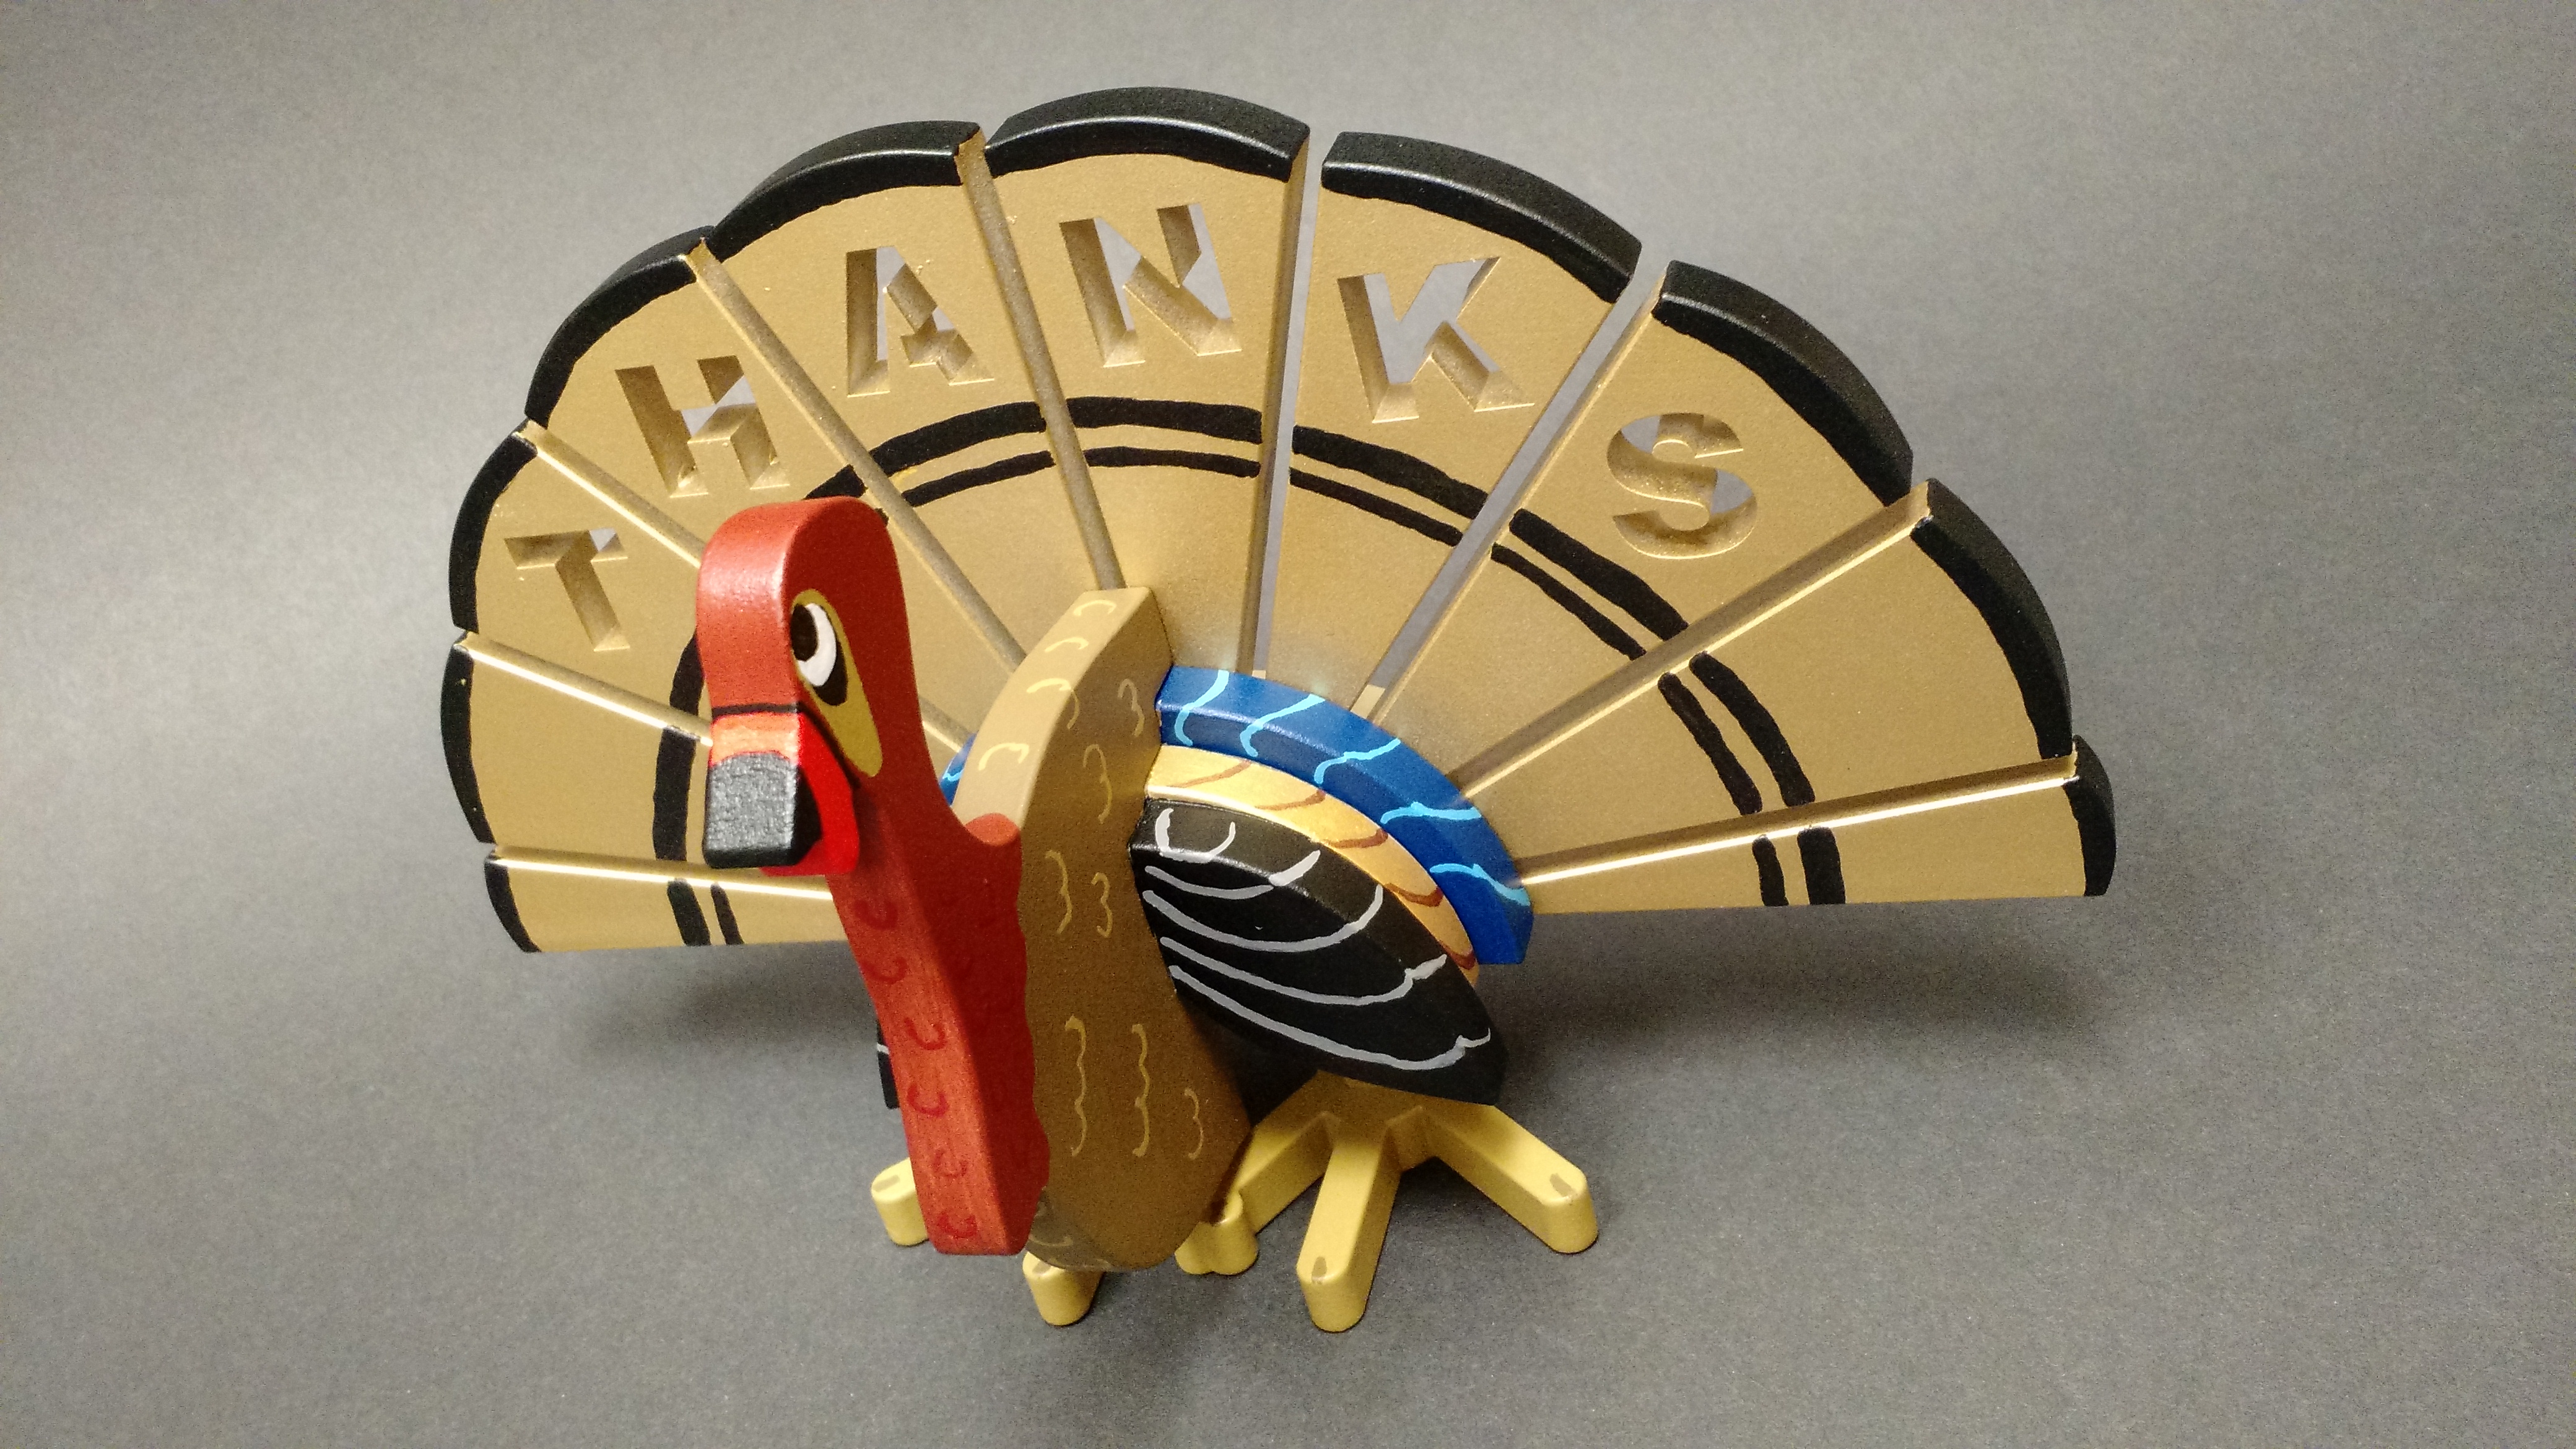 3D Printed Turkey